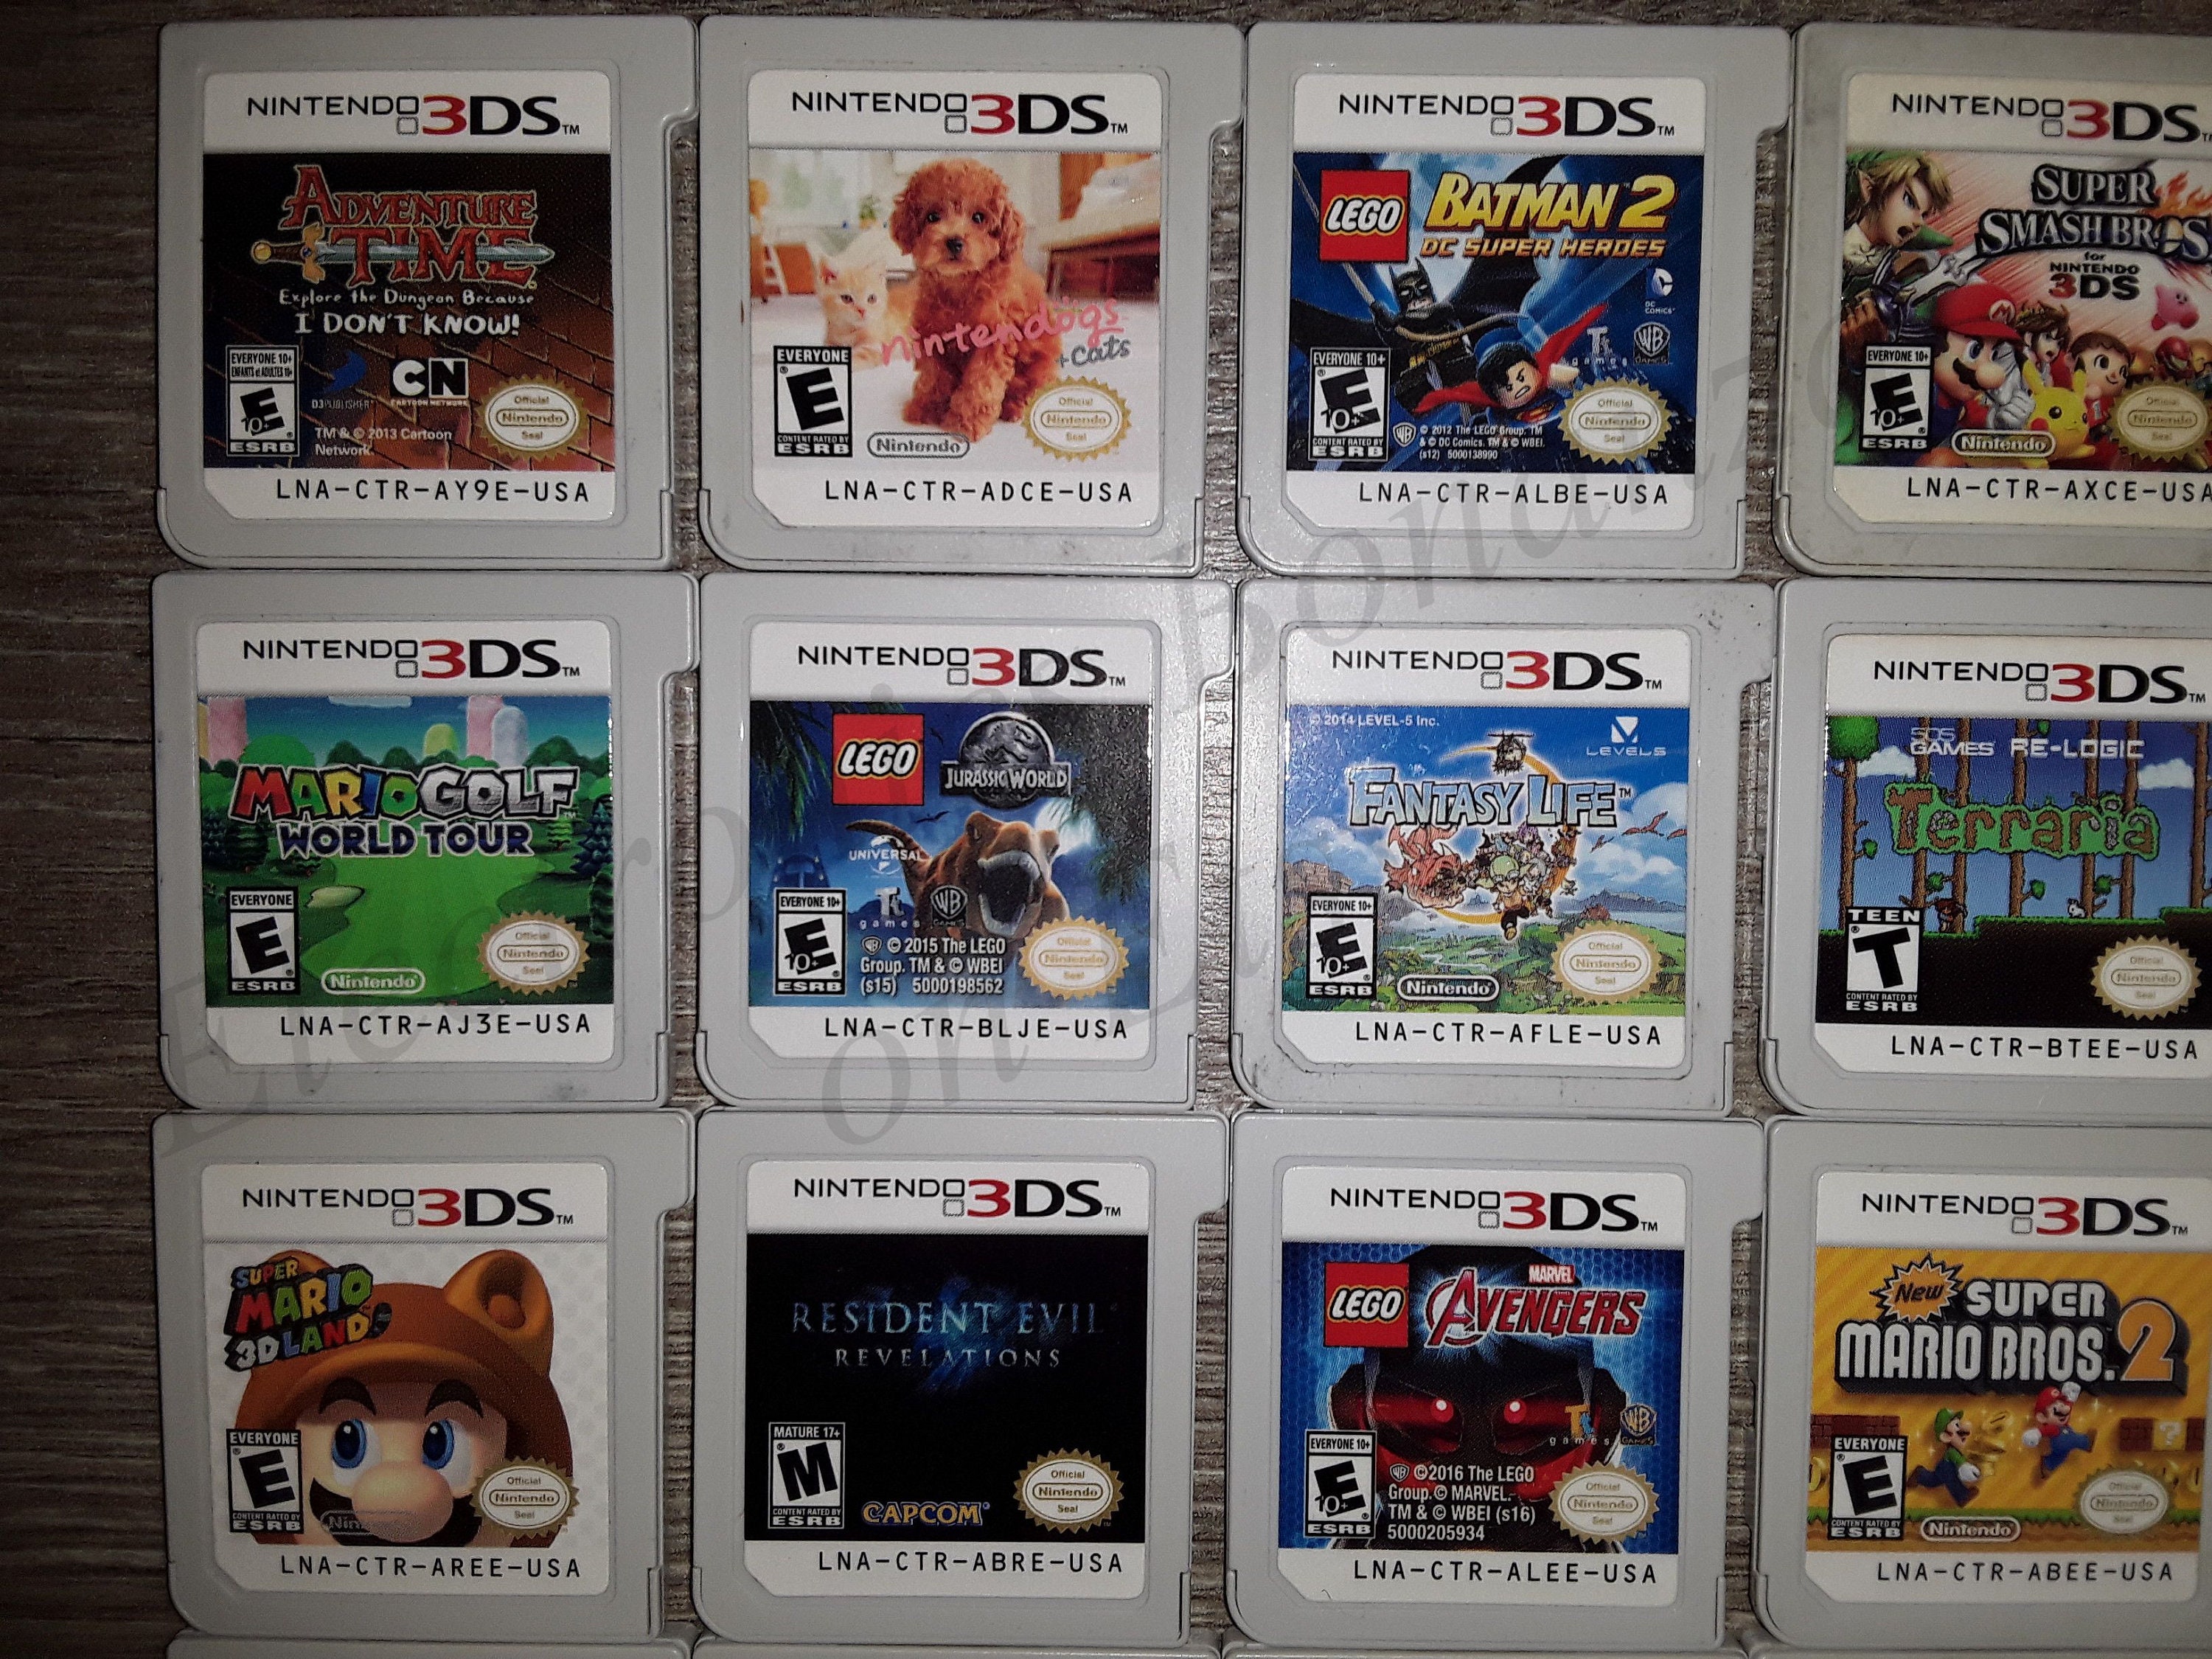 Nintendo 3DS Resident Evil Video Games for sale